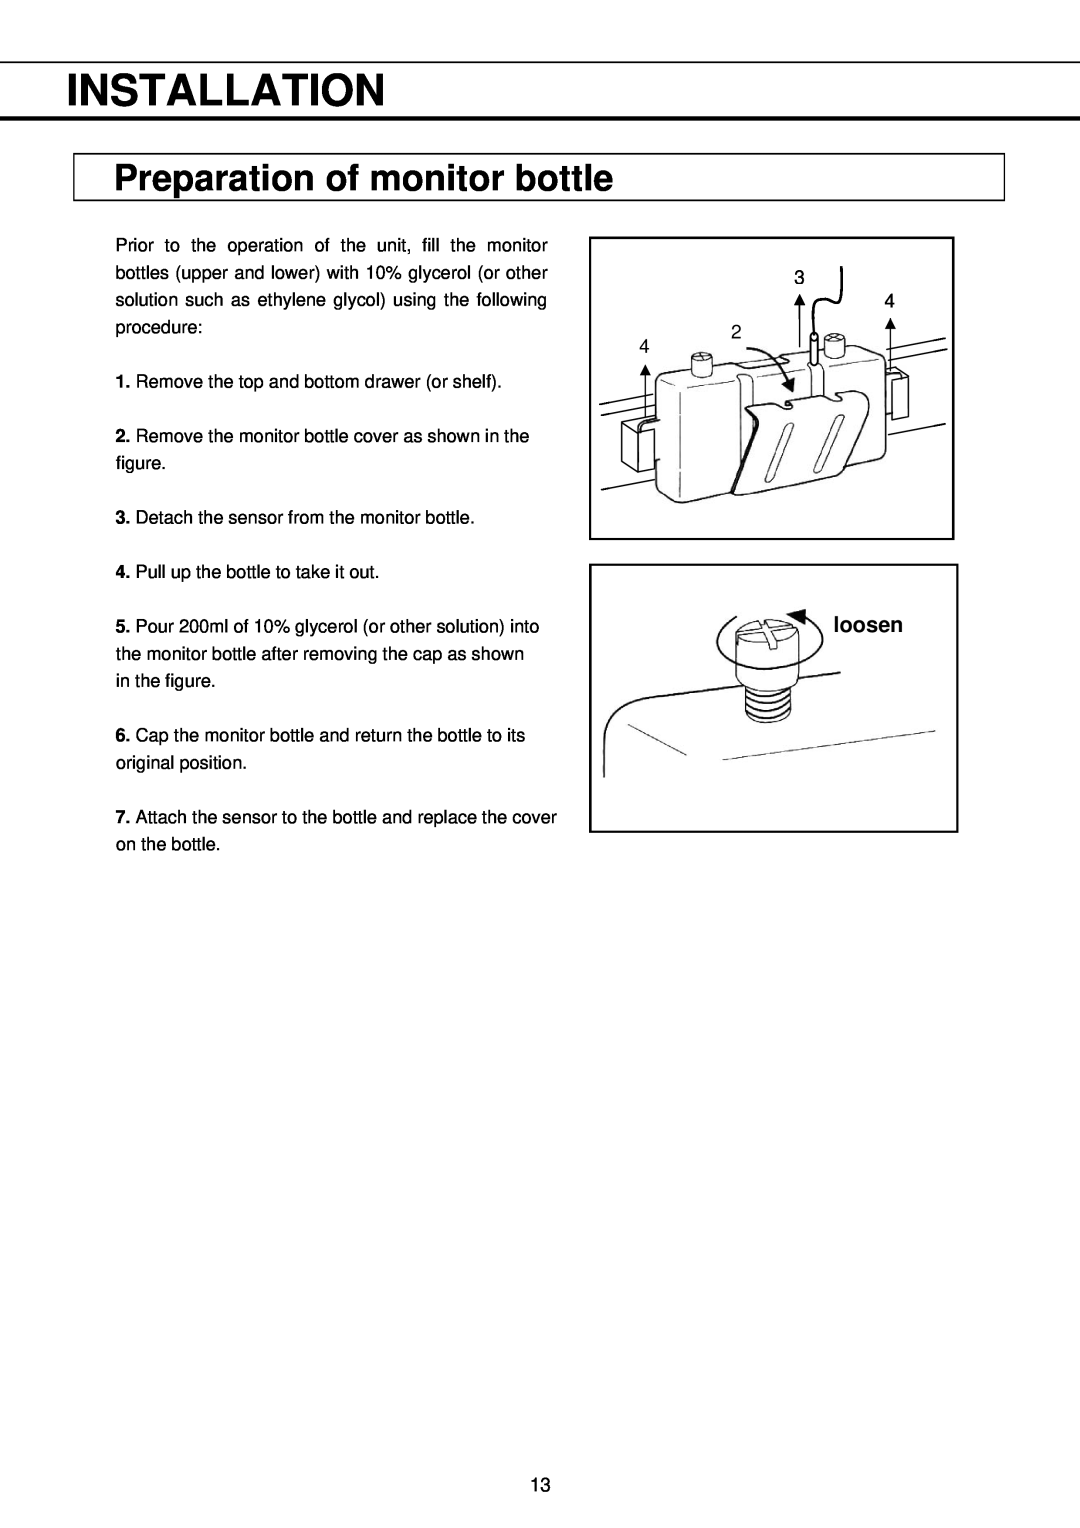 Sanyo MBR-704GR instruction manual Preparation of monitor bottle, Installation, loosen, 3 4 2 